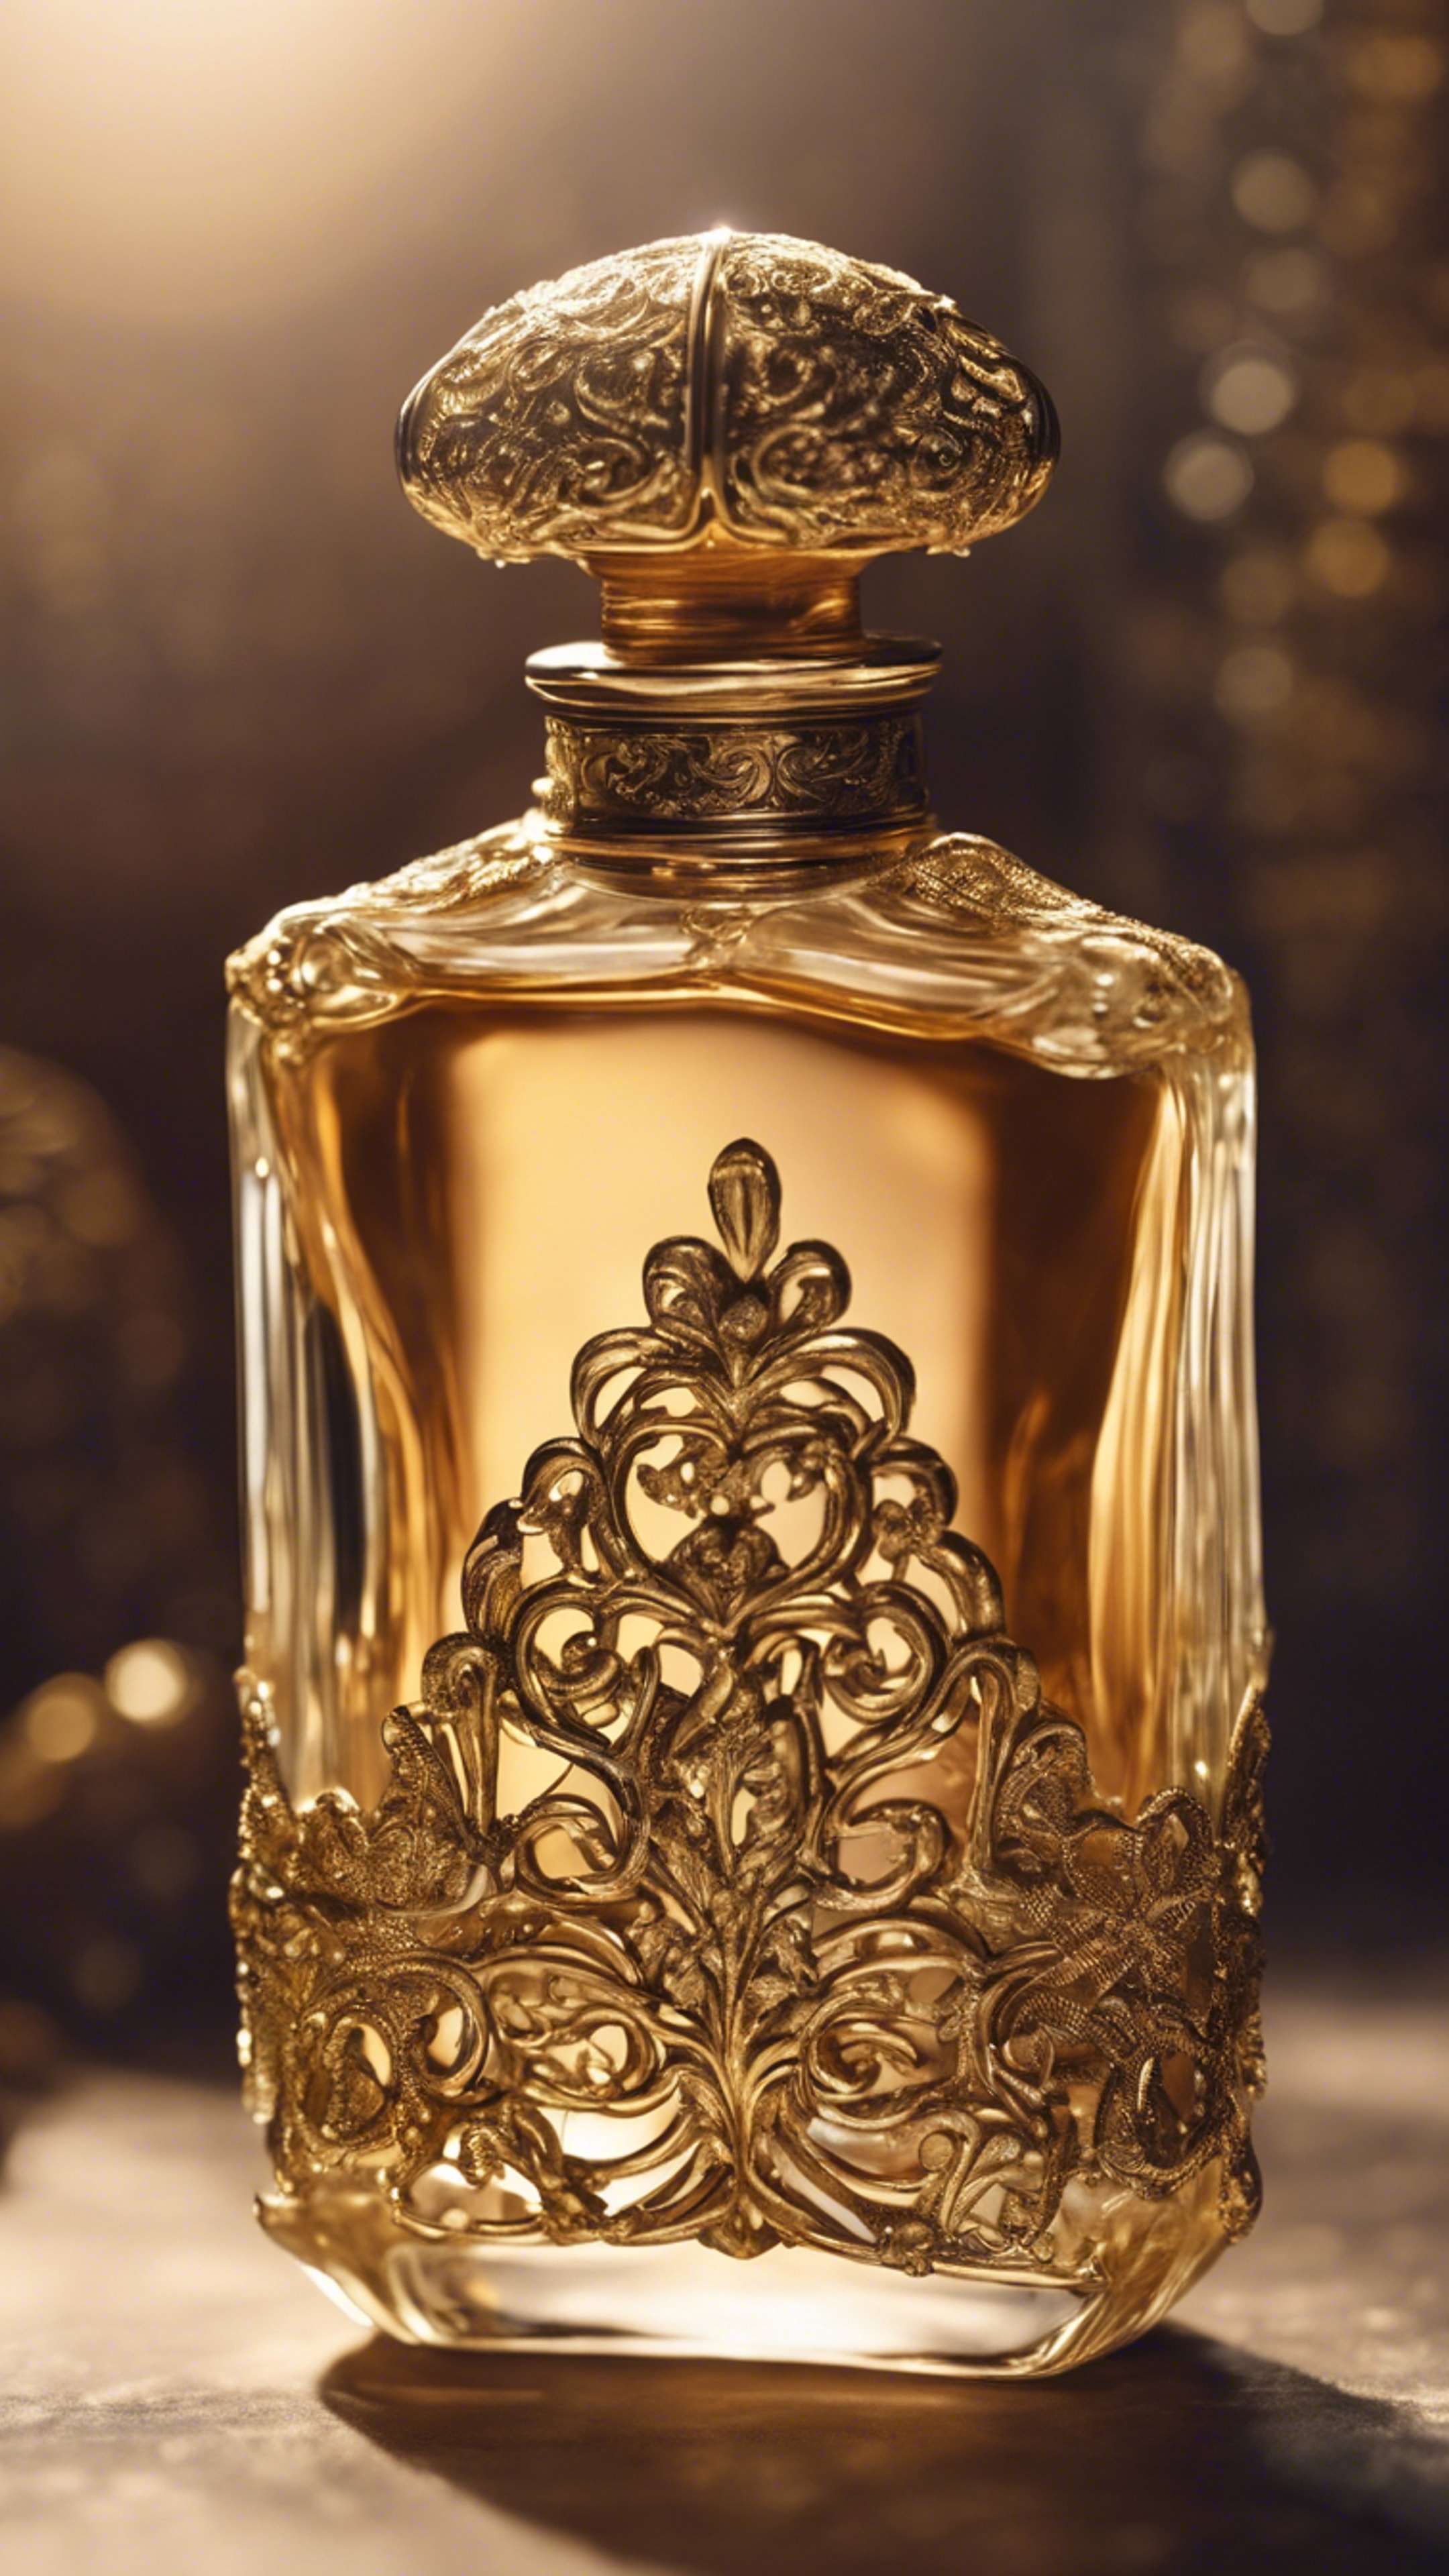 An antique perfume bottle with delicate gold filigree luxury cosmetic item. Divar kağızı[fe361f22190a4891a6d9]